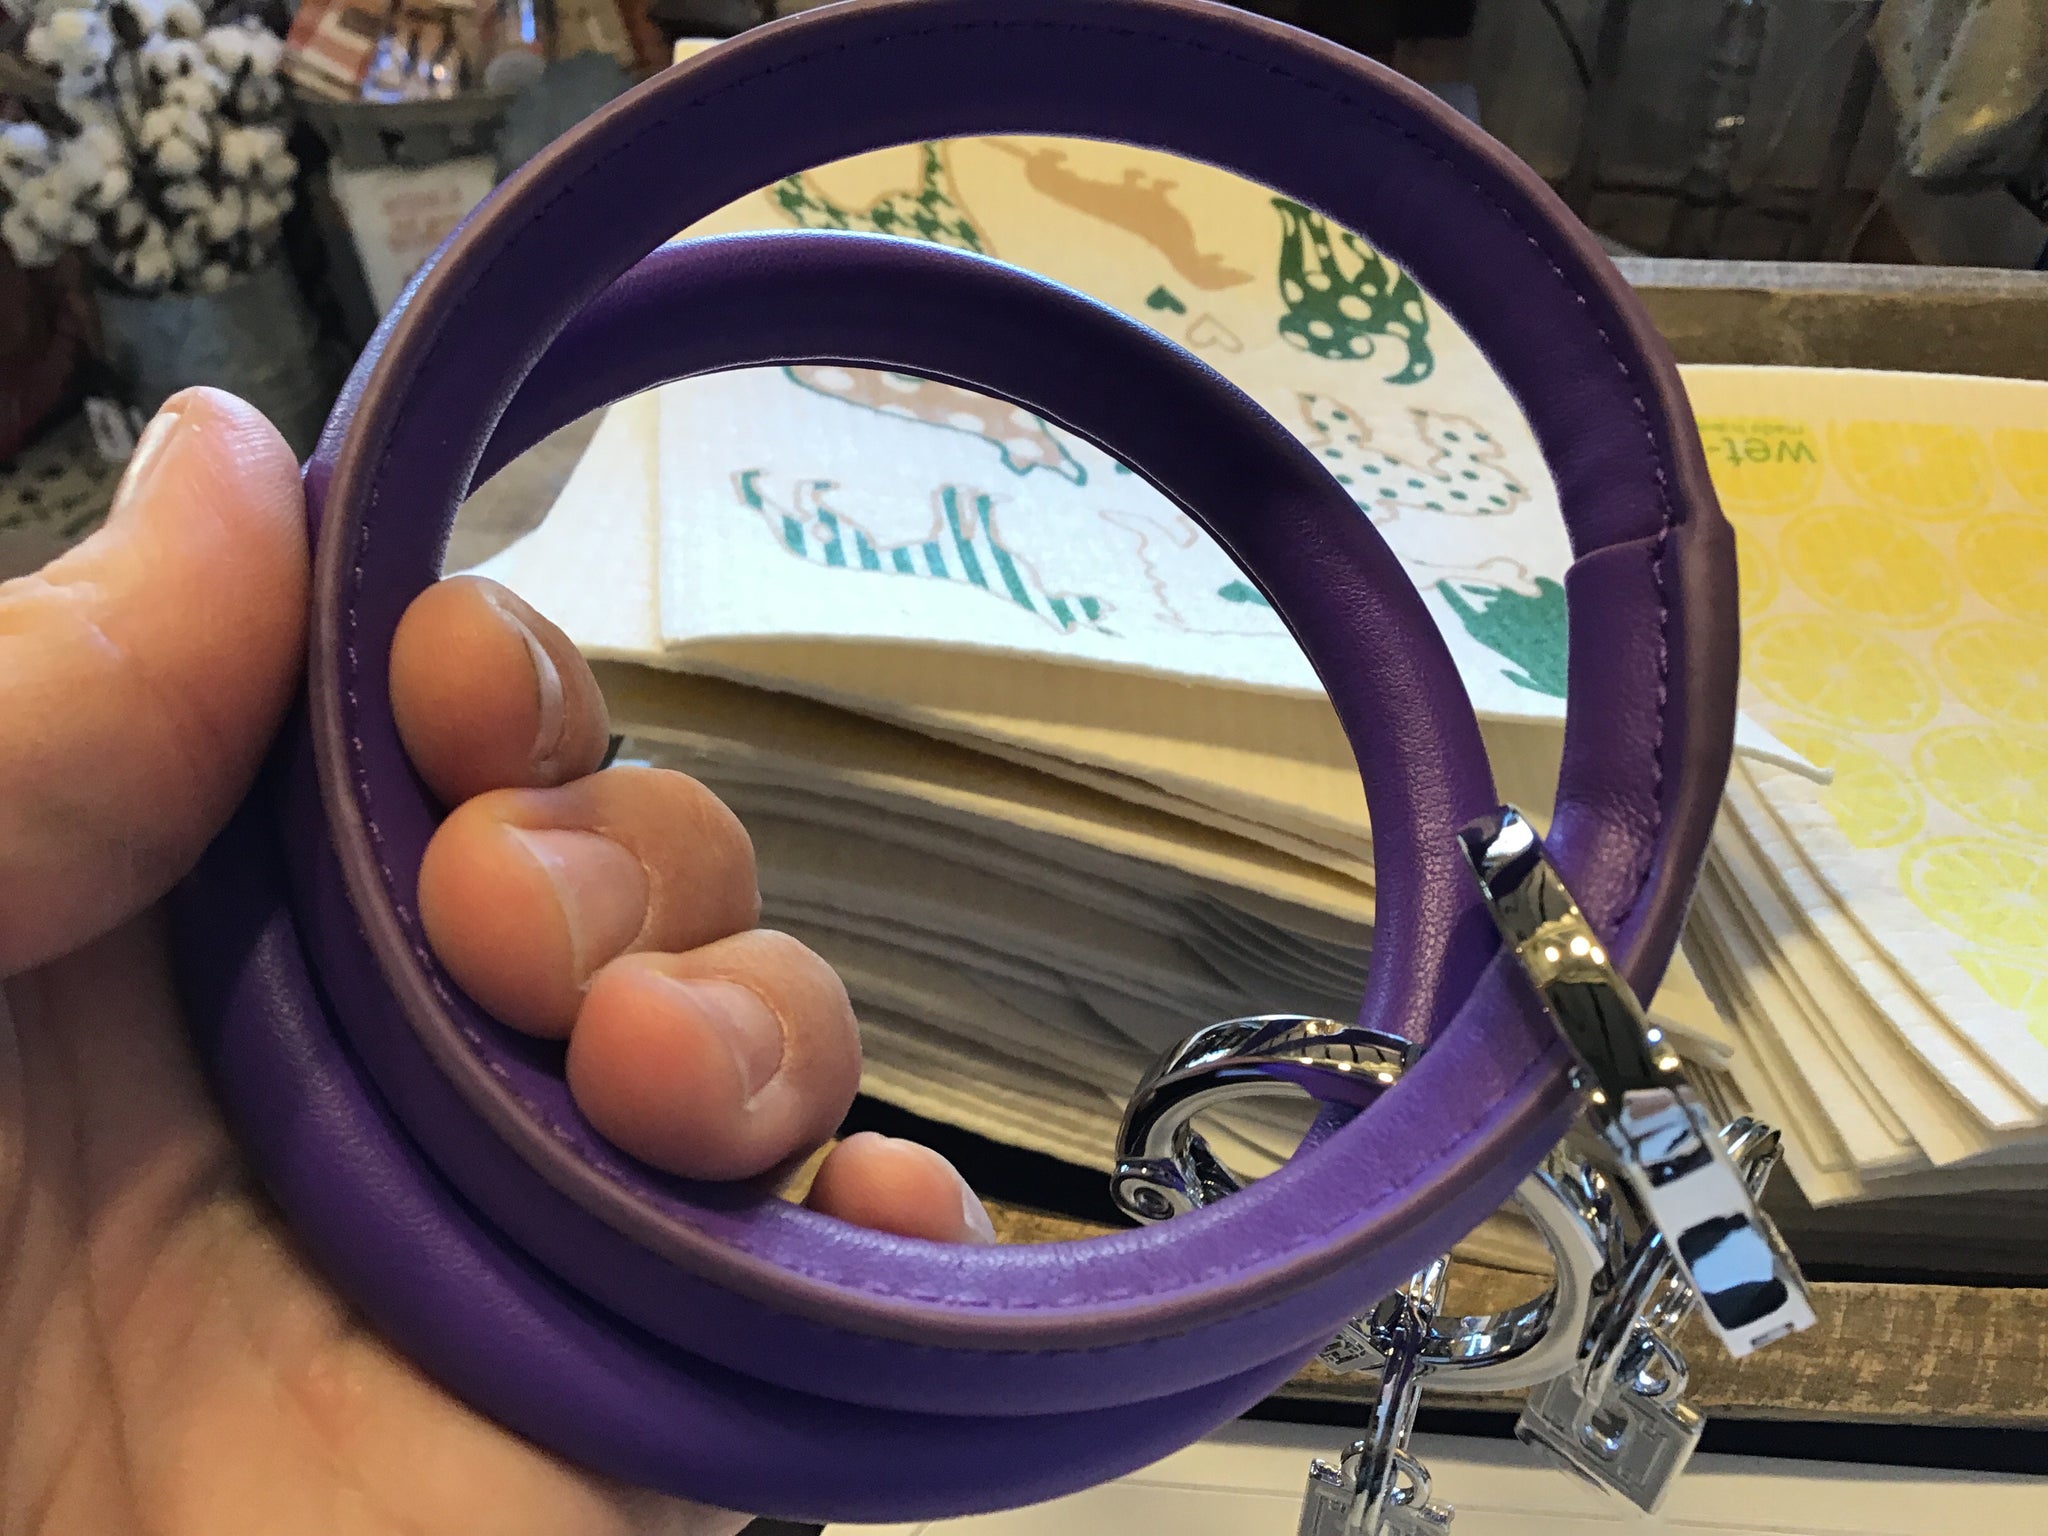 Oventure Big O Silicone Key Ring - Deep Purple